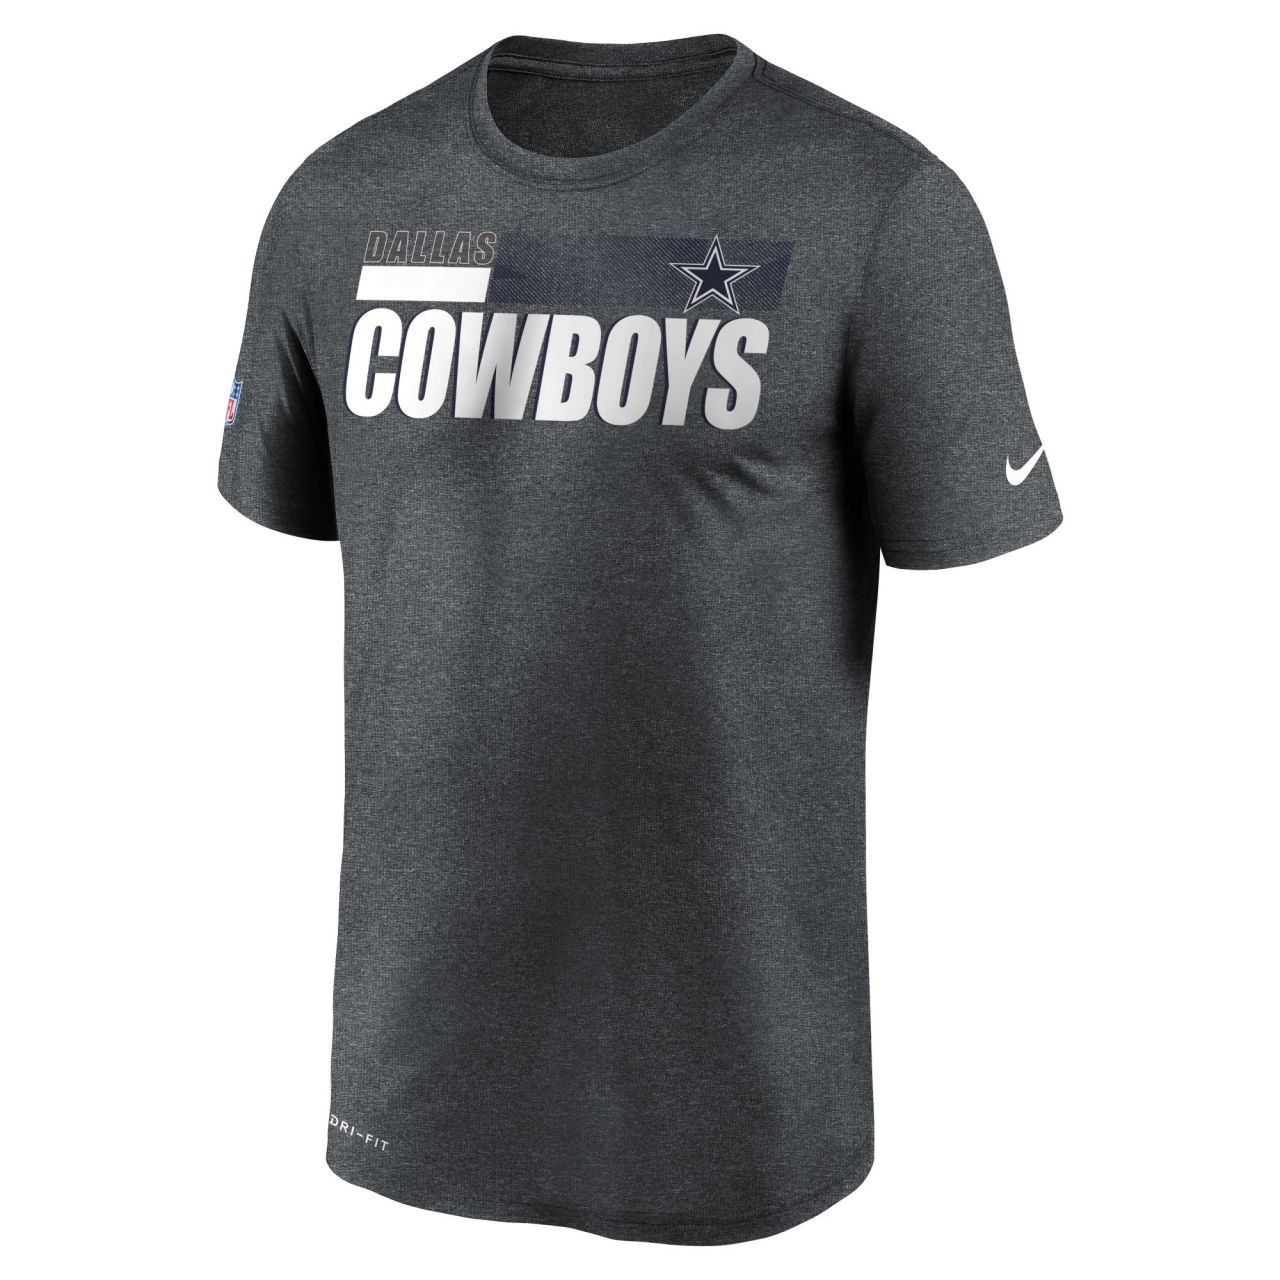 amfoo - Nike Dri-FIT Legend Shirt - SIDELINE Dallas Cowboys